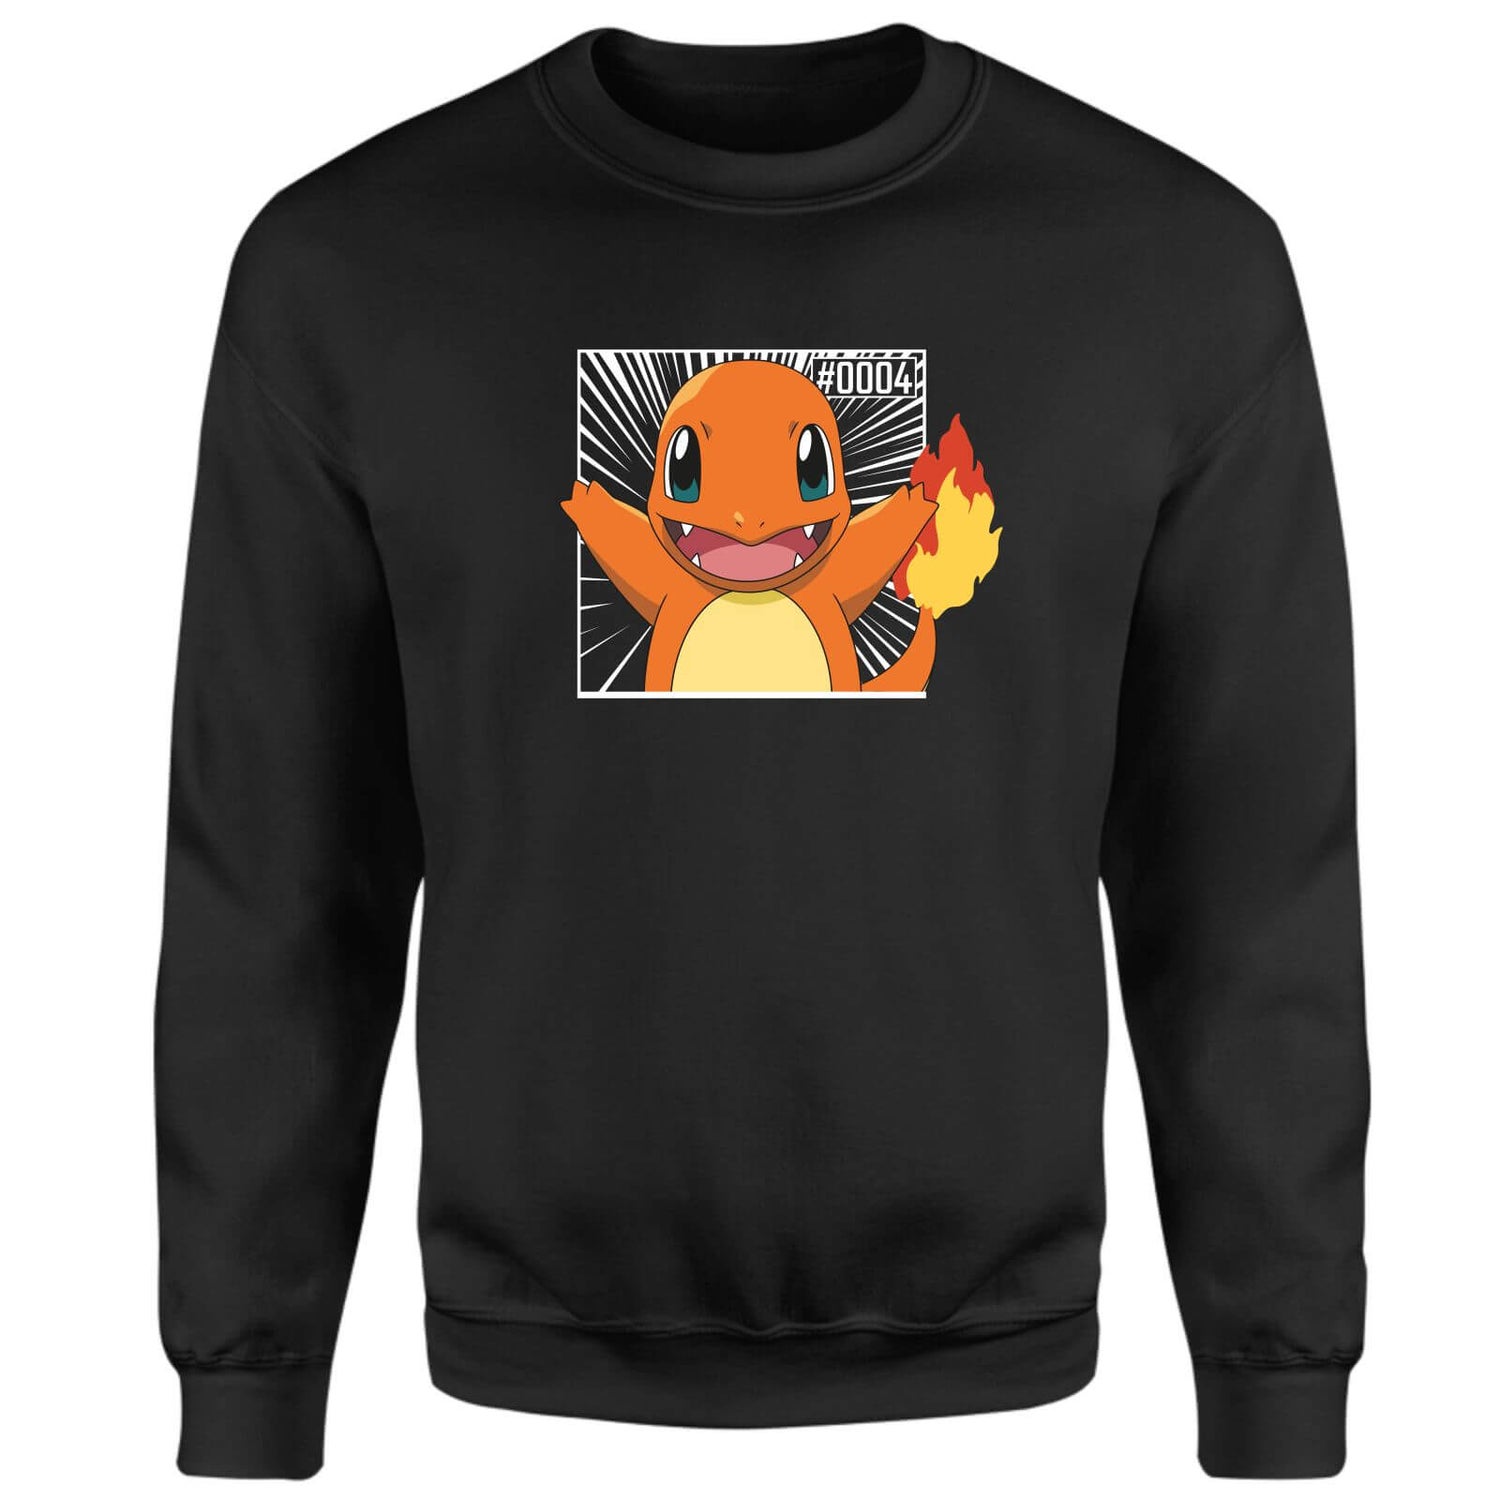 Pokémon Pokédex Charmander #0004 Sweatshirt - Black